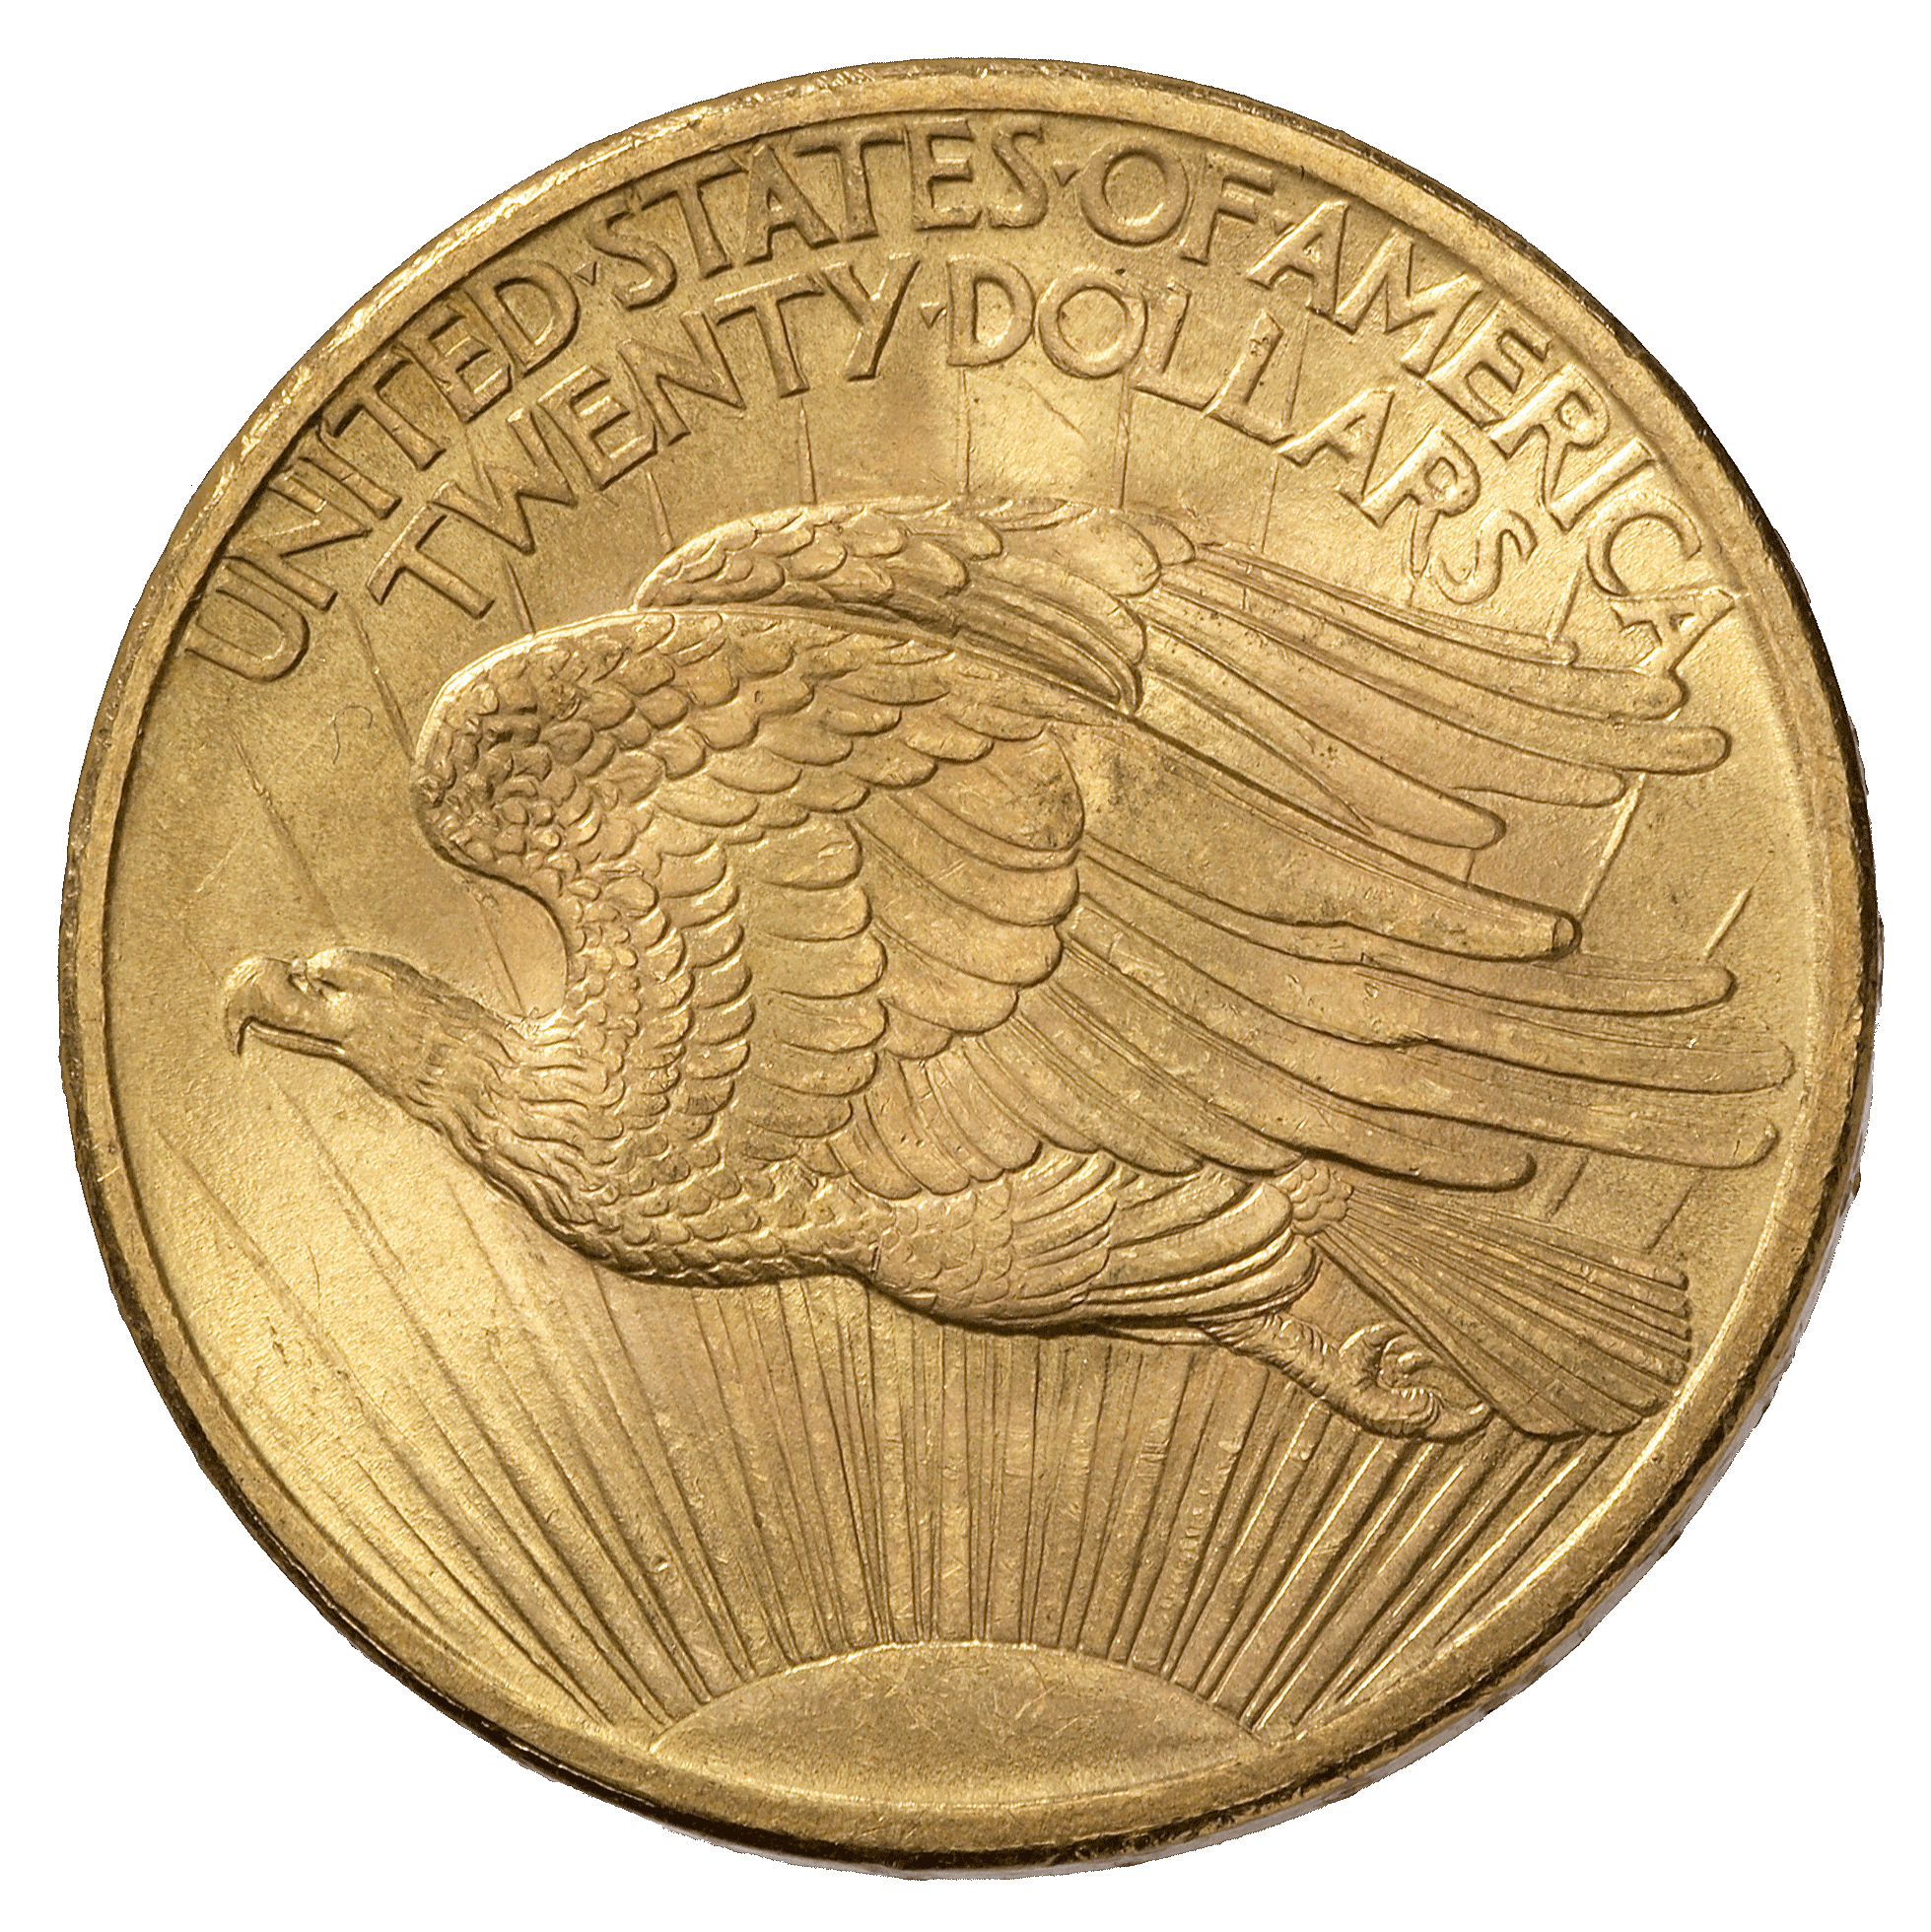 United States of America, 20 Dollar 1908 (reverse)